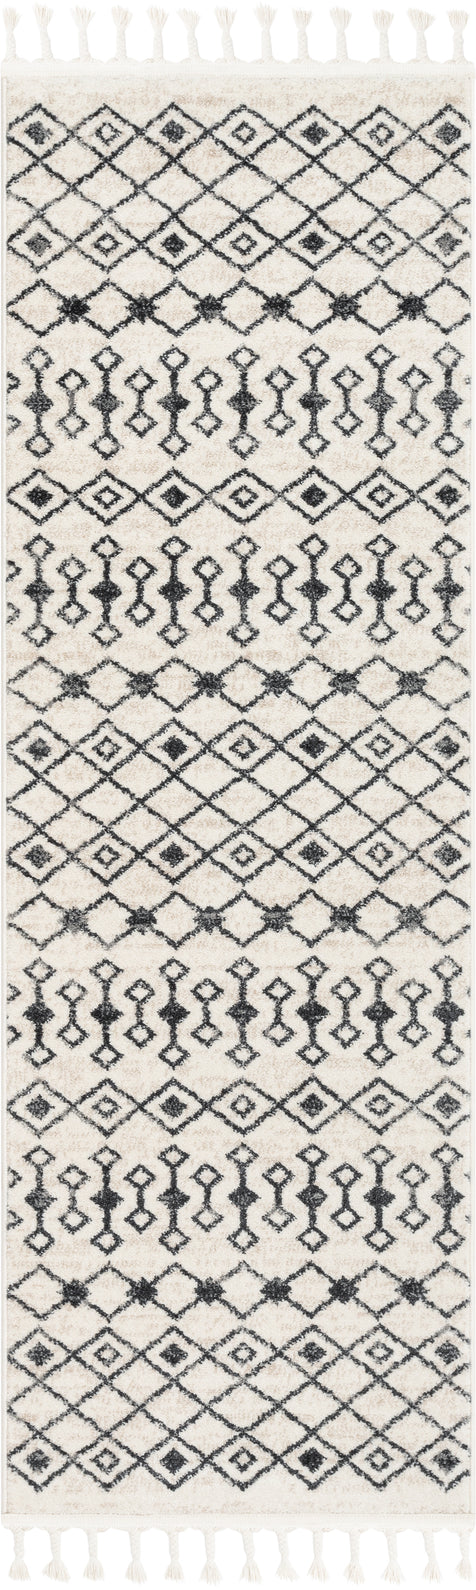 Transistora Nordic Tribal Trellis Pattern Charcoal Ivory Rug